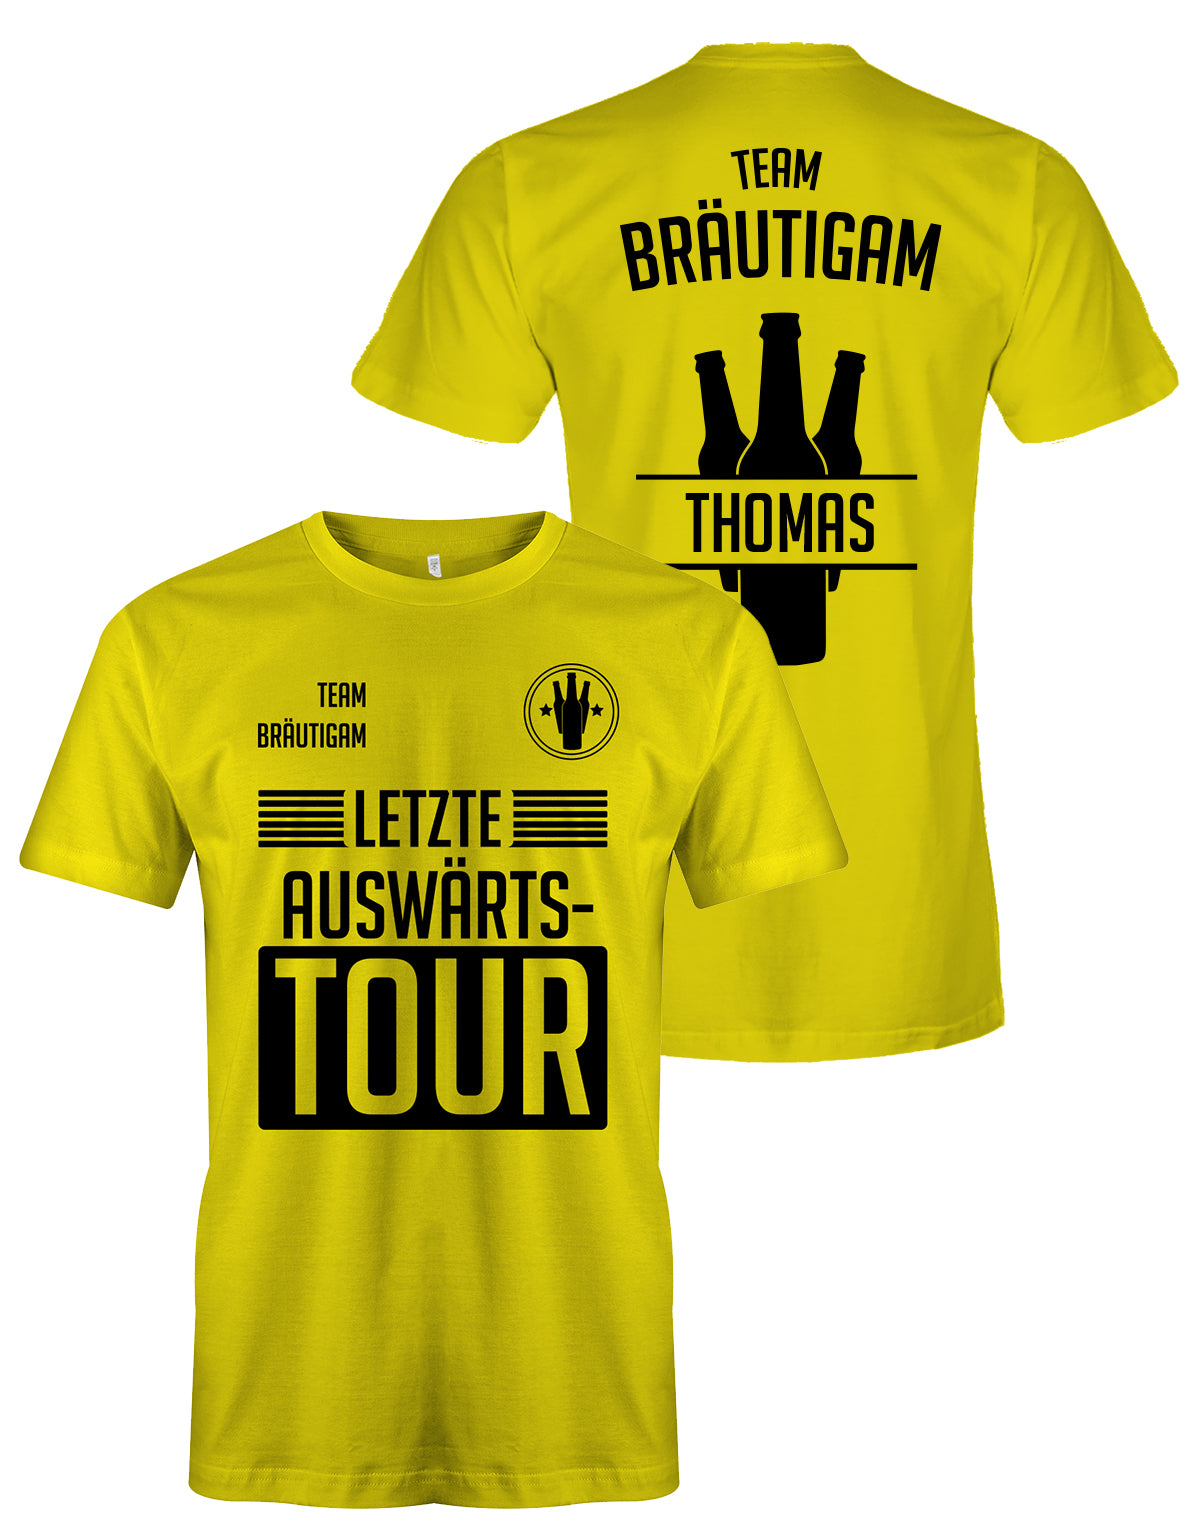 Letzte Auswärtstour JGA T Shirt - Bräutigam oder Team Bräutigam mit Namen Gelb